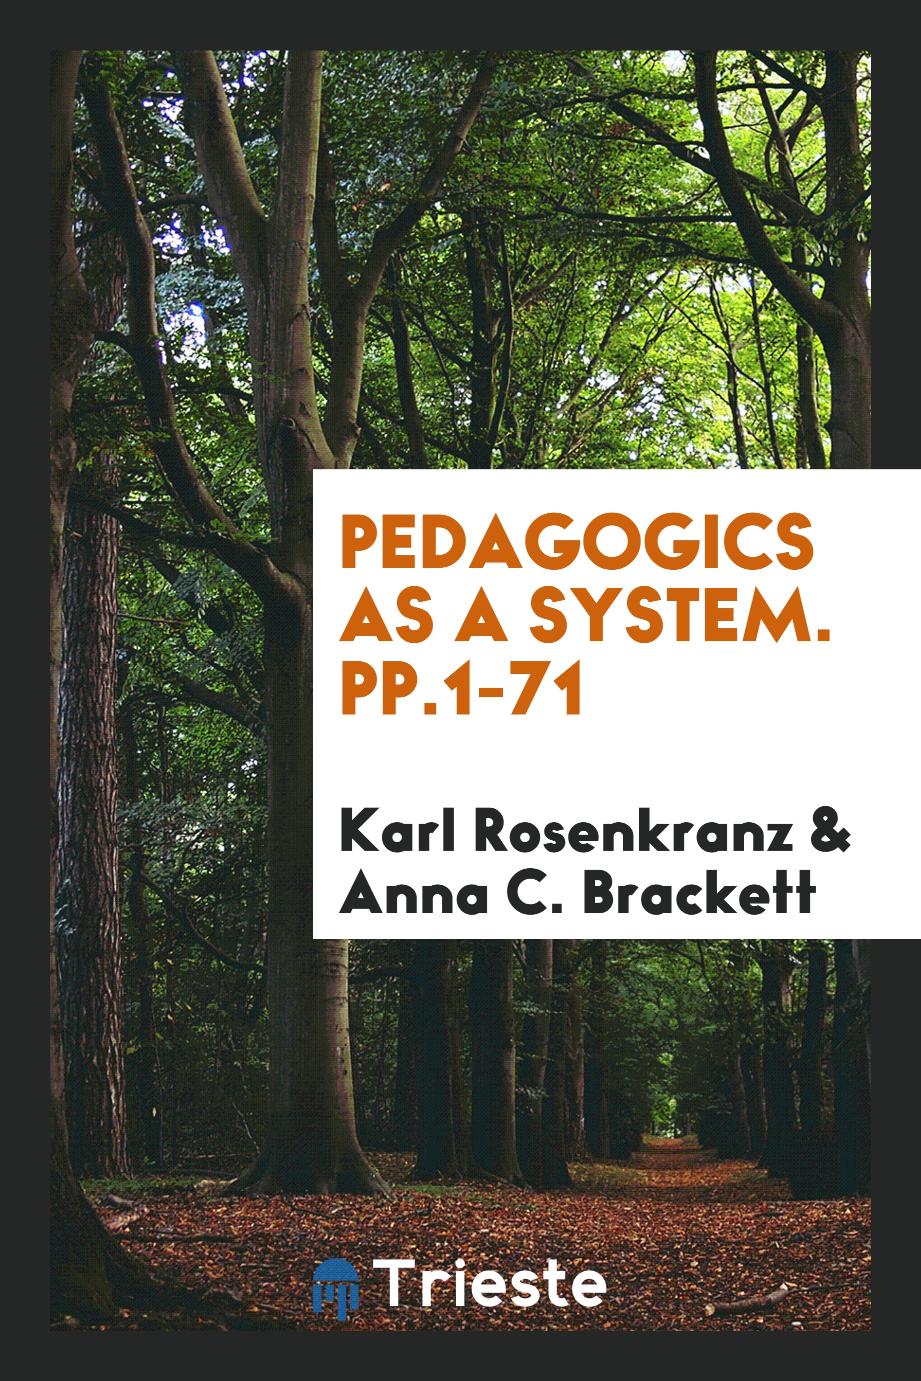 Pedagogics as a System. pp.1-71